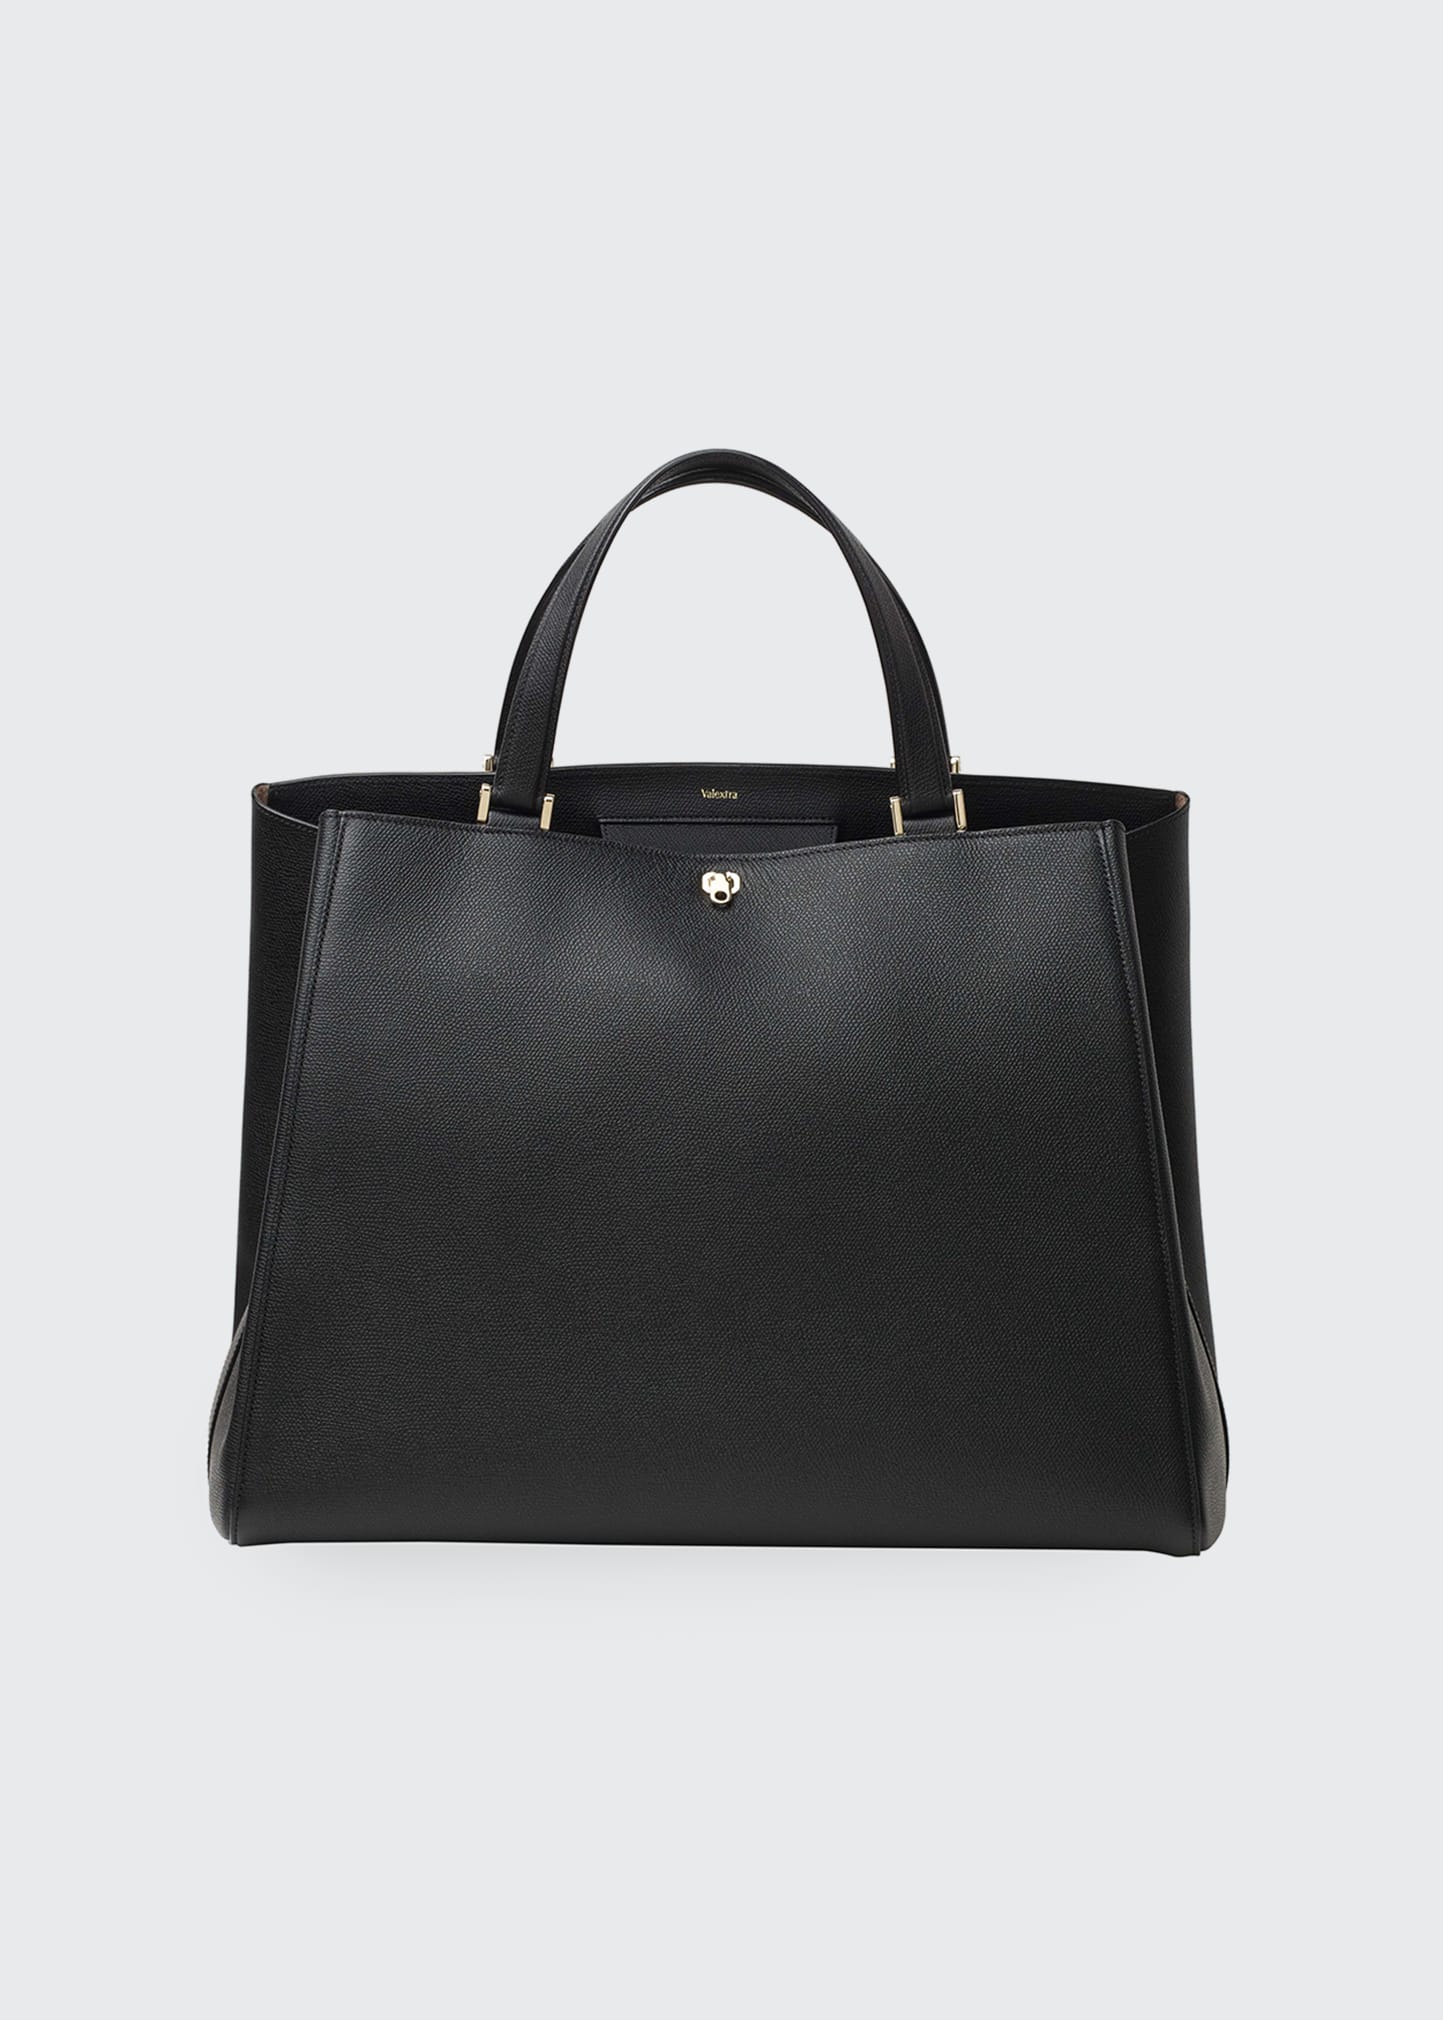 Valextra Brera Large Leather Top-handle Tote Bag In Nn Black | ModeSens